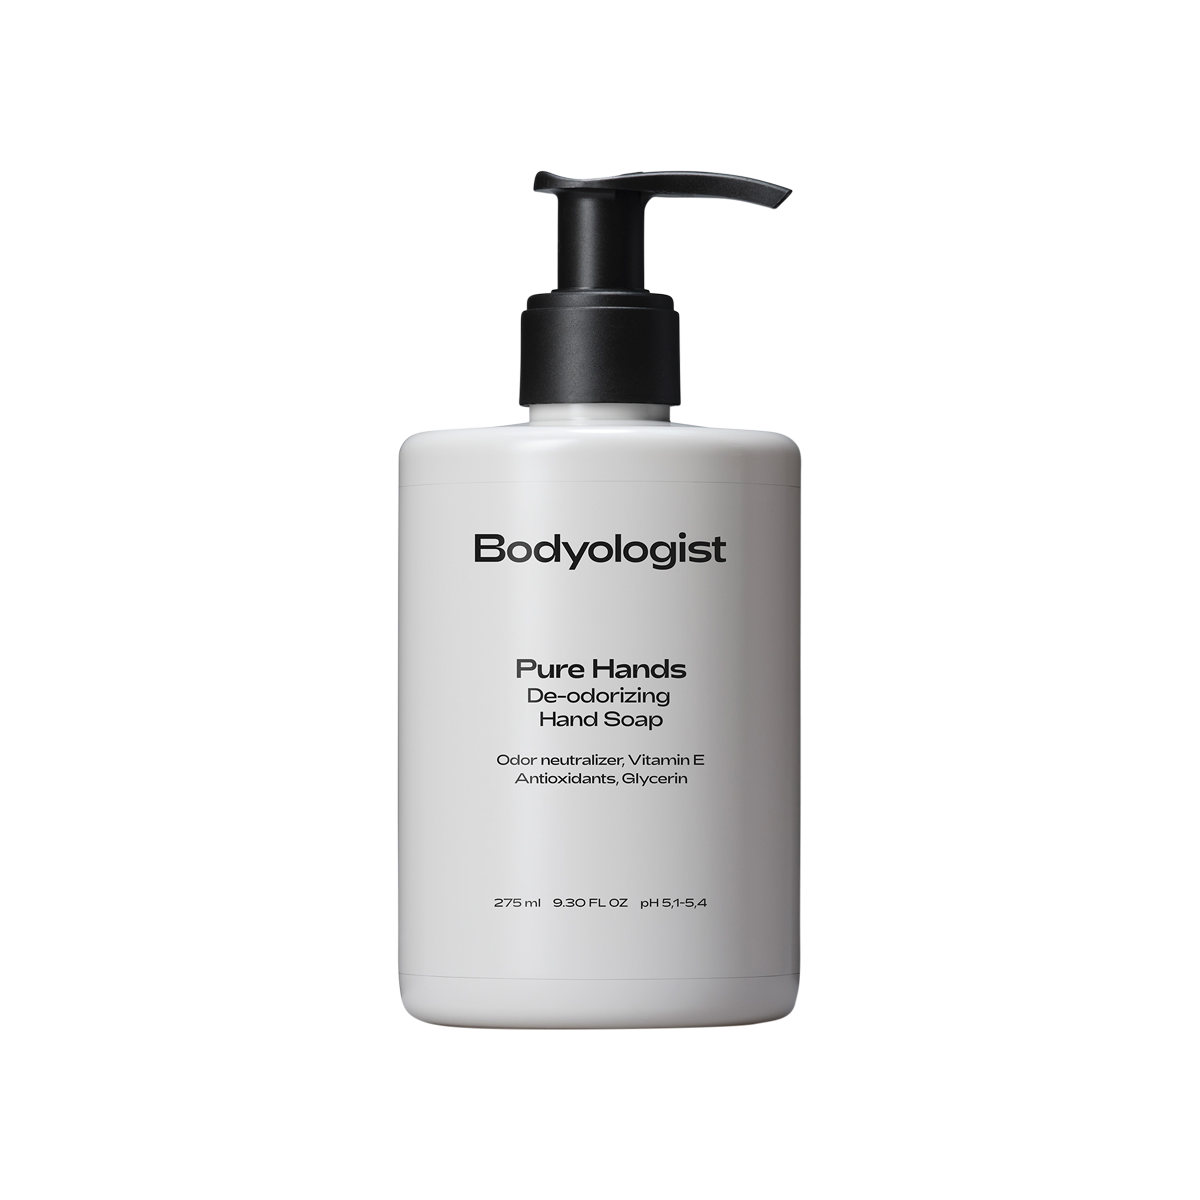 Bodyologist - Pure Hands De-odorizing Hand Soap